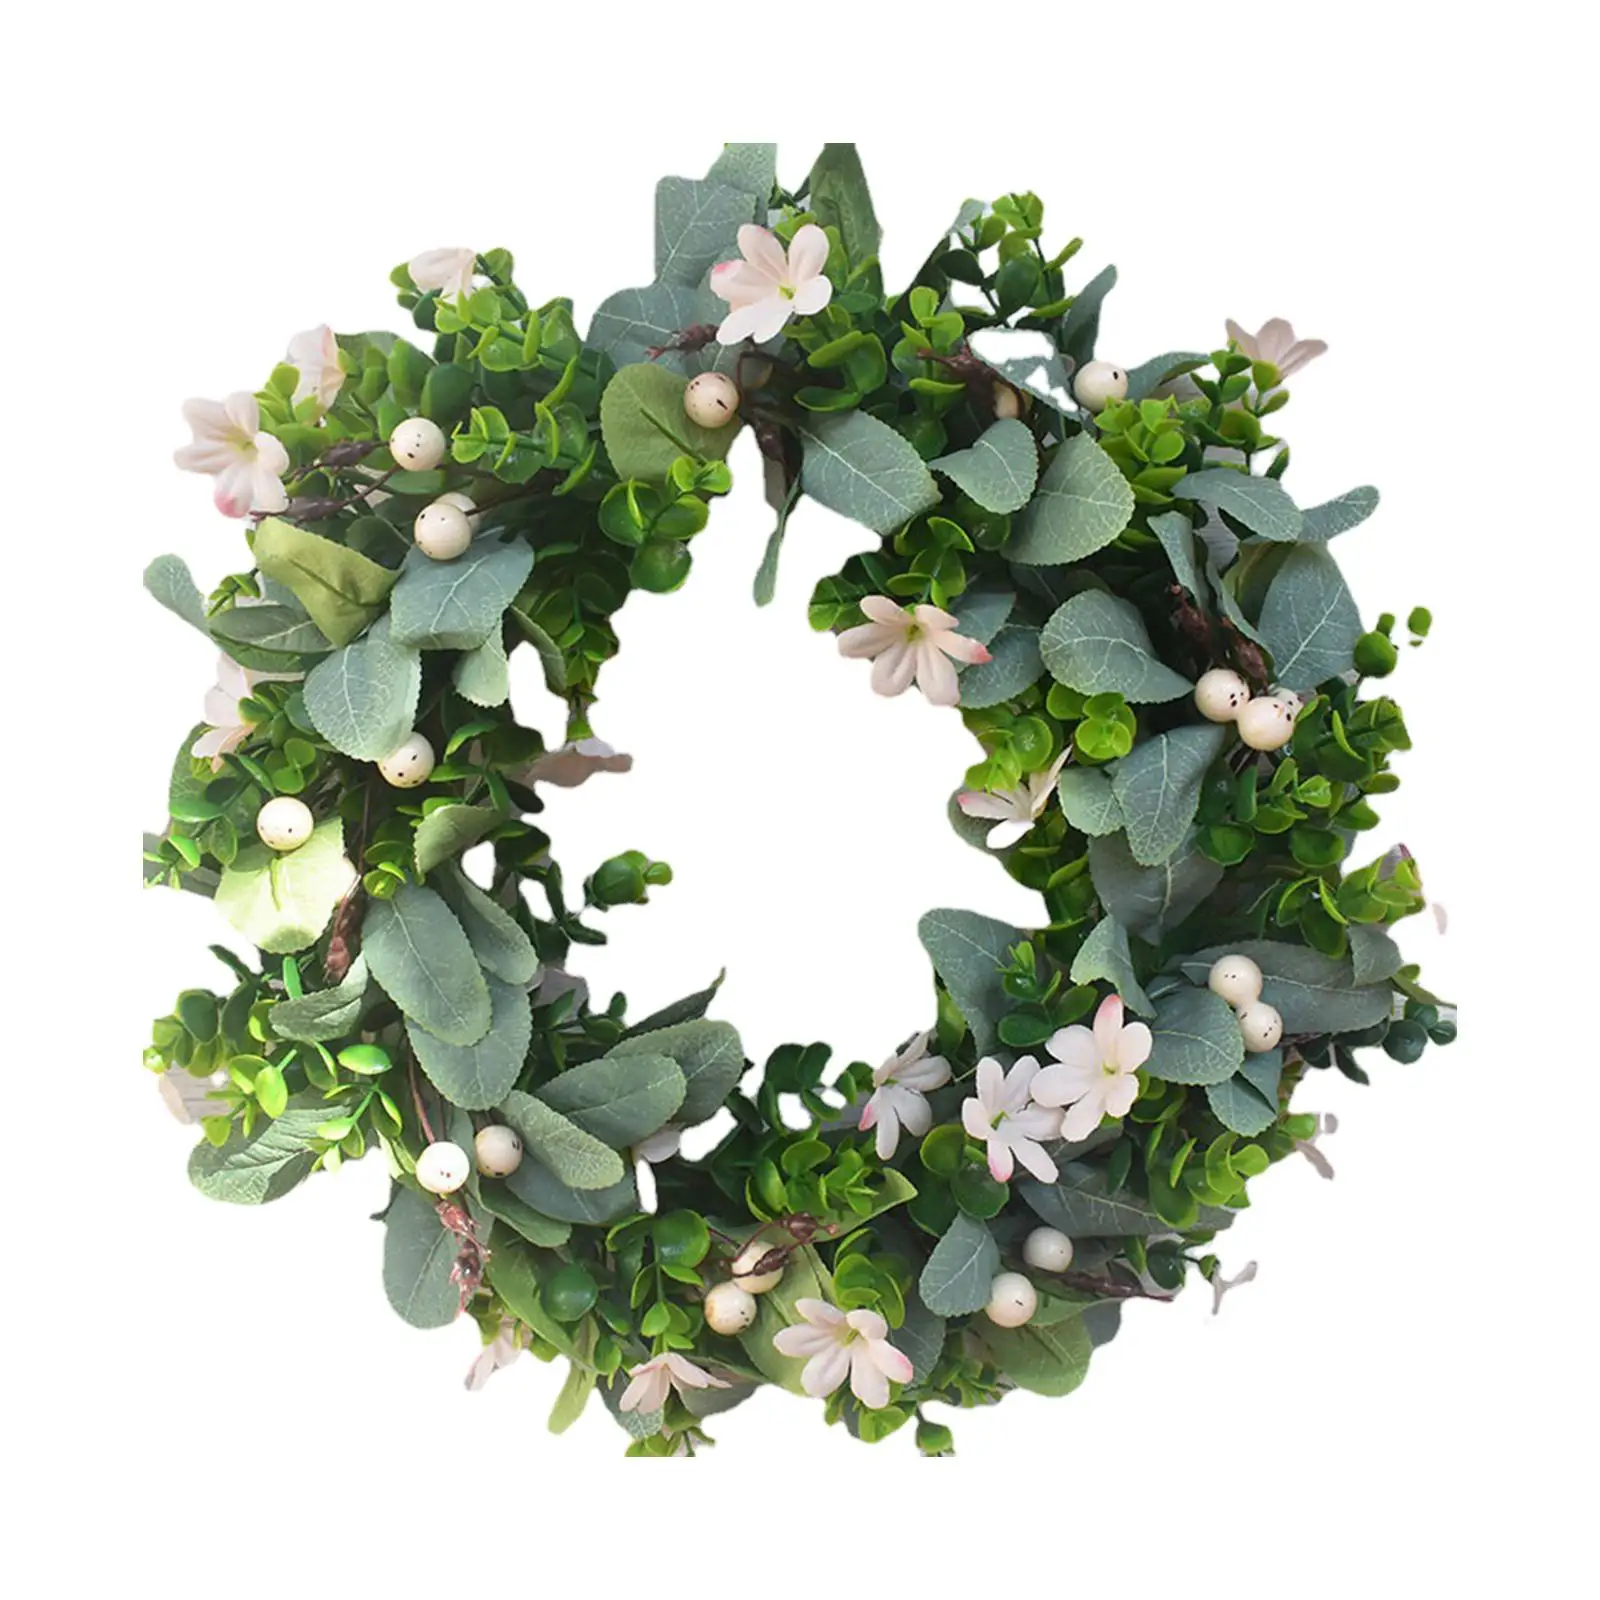 Simulation Artificial Wreath Garland 16.5